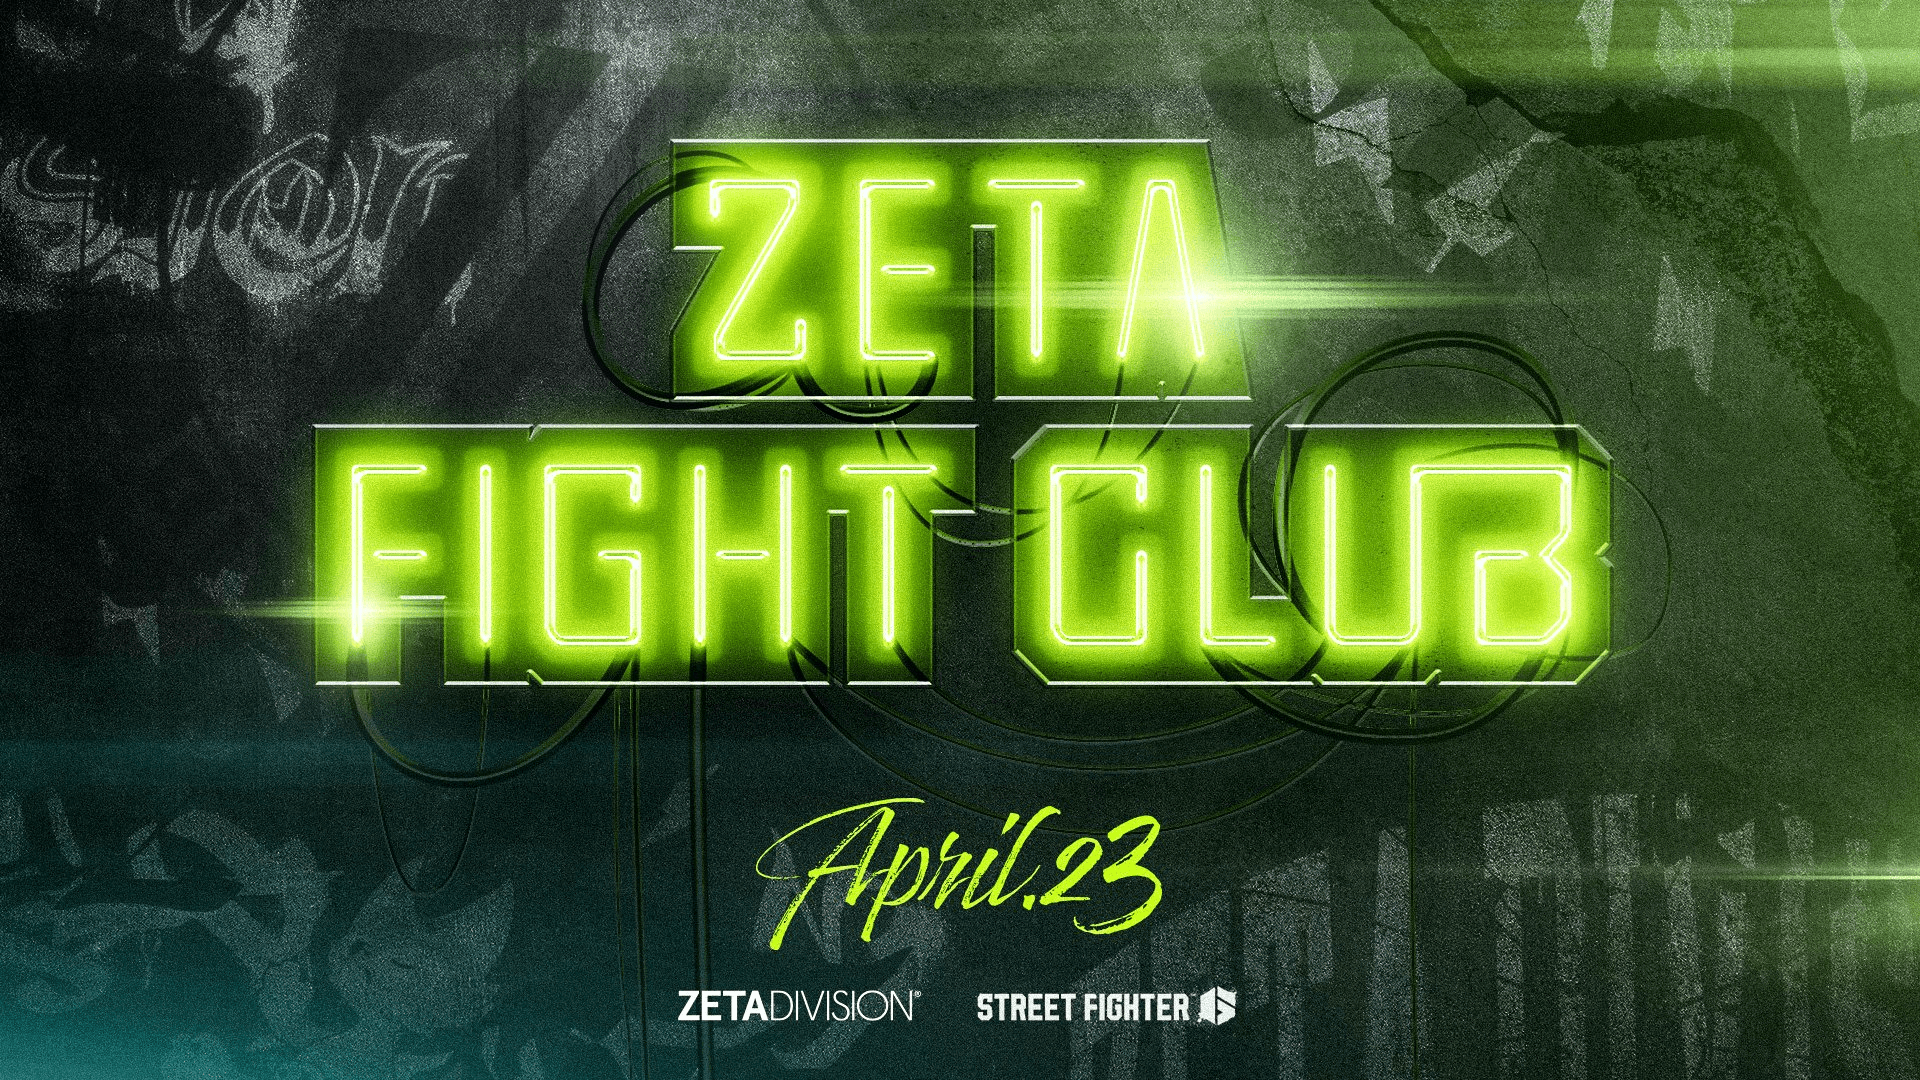 ZETA FIGHT CLUB feature image